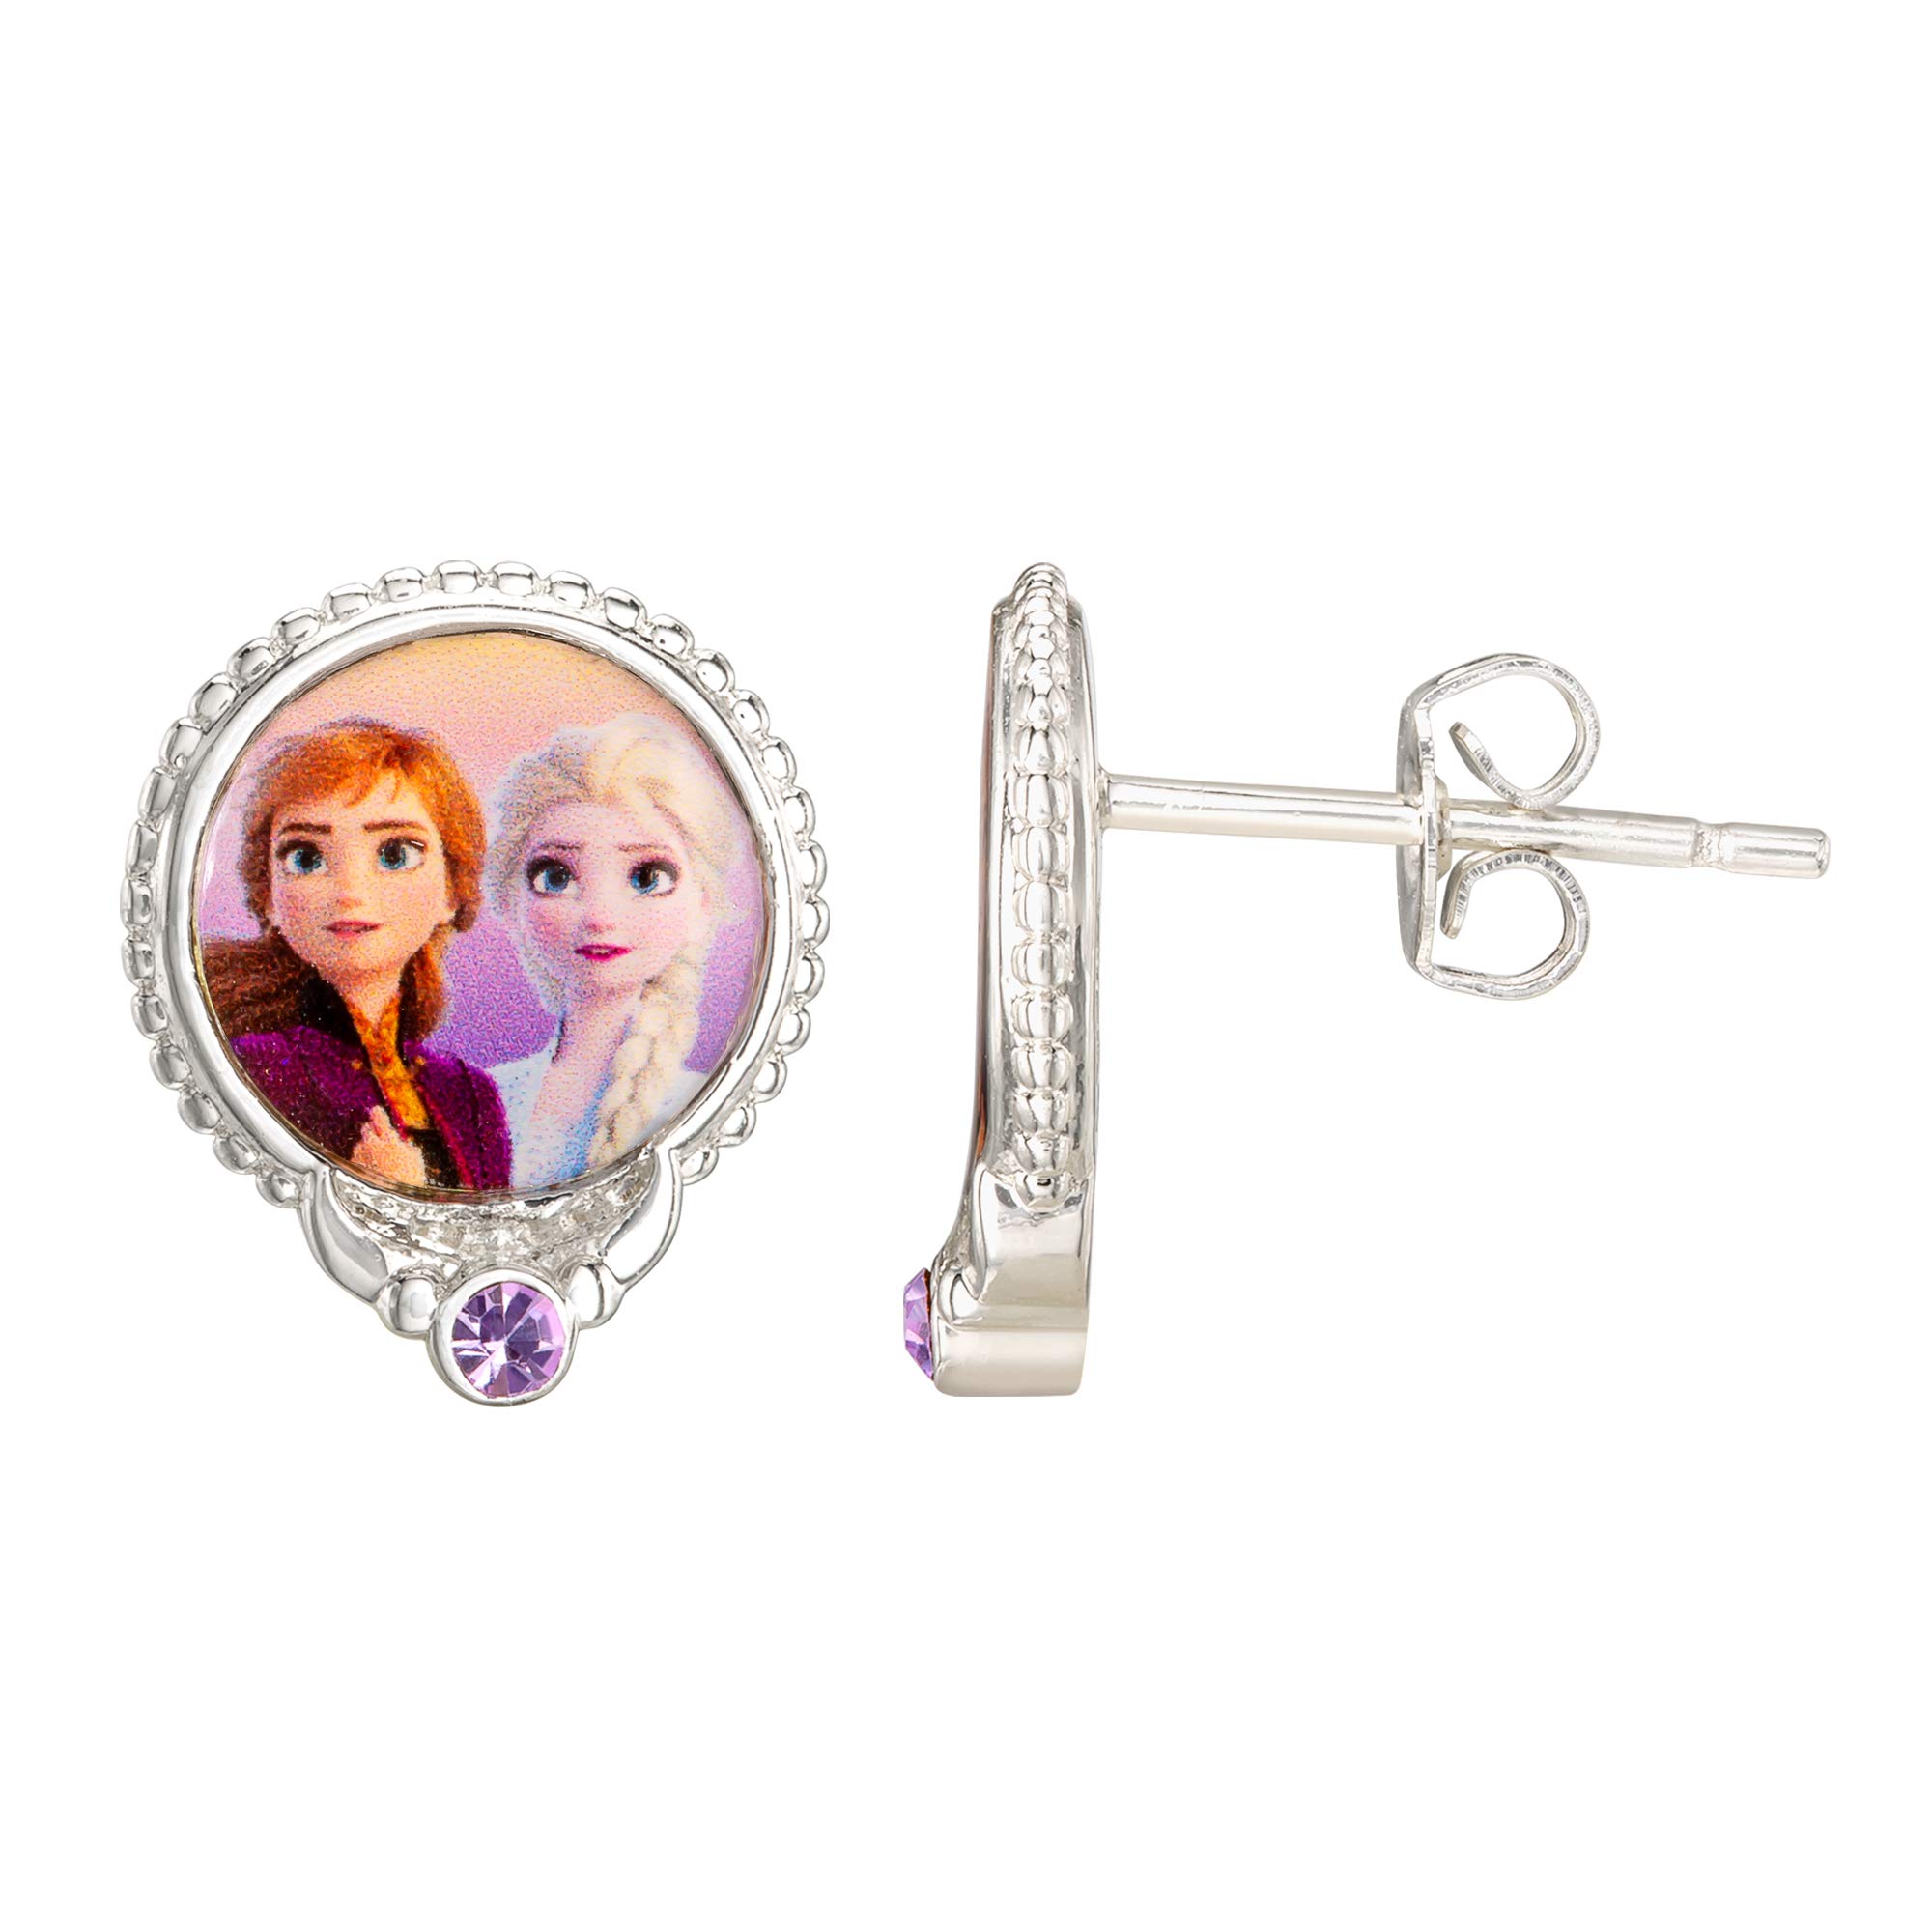 Disney Womens Frozen II Earrings - Silver Plated Stud Earrings with Anna, Elsa, and Olaf - Frozen Earrings - Disney Earrings